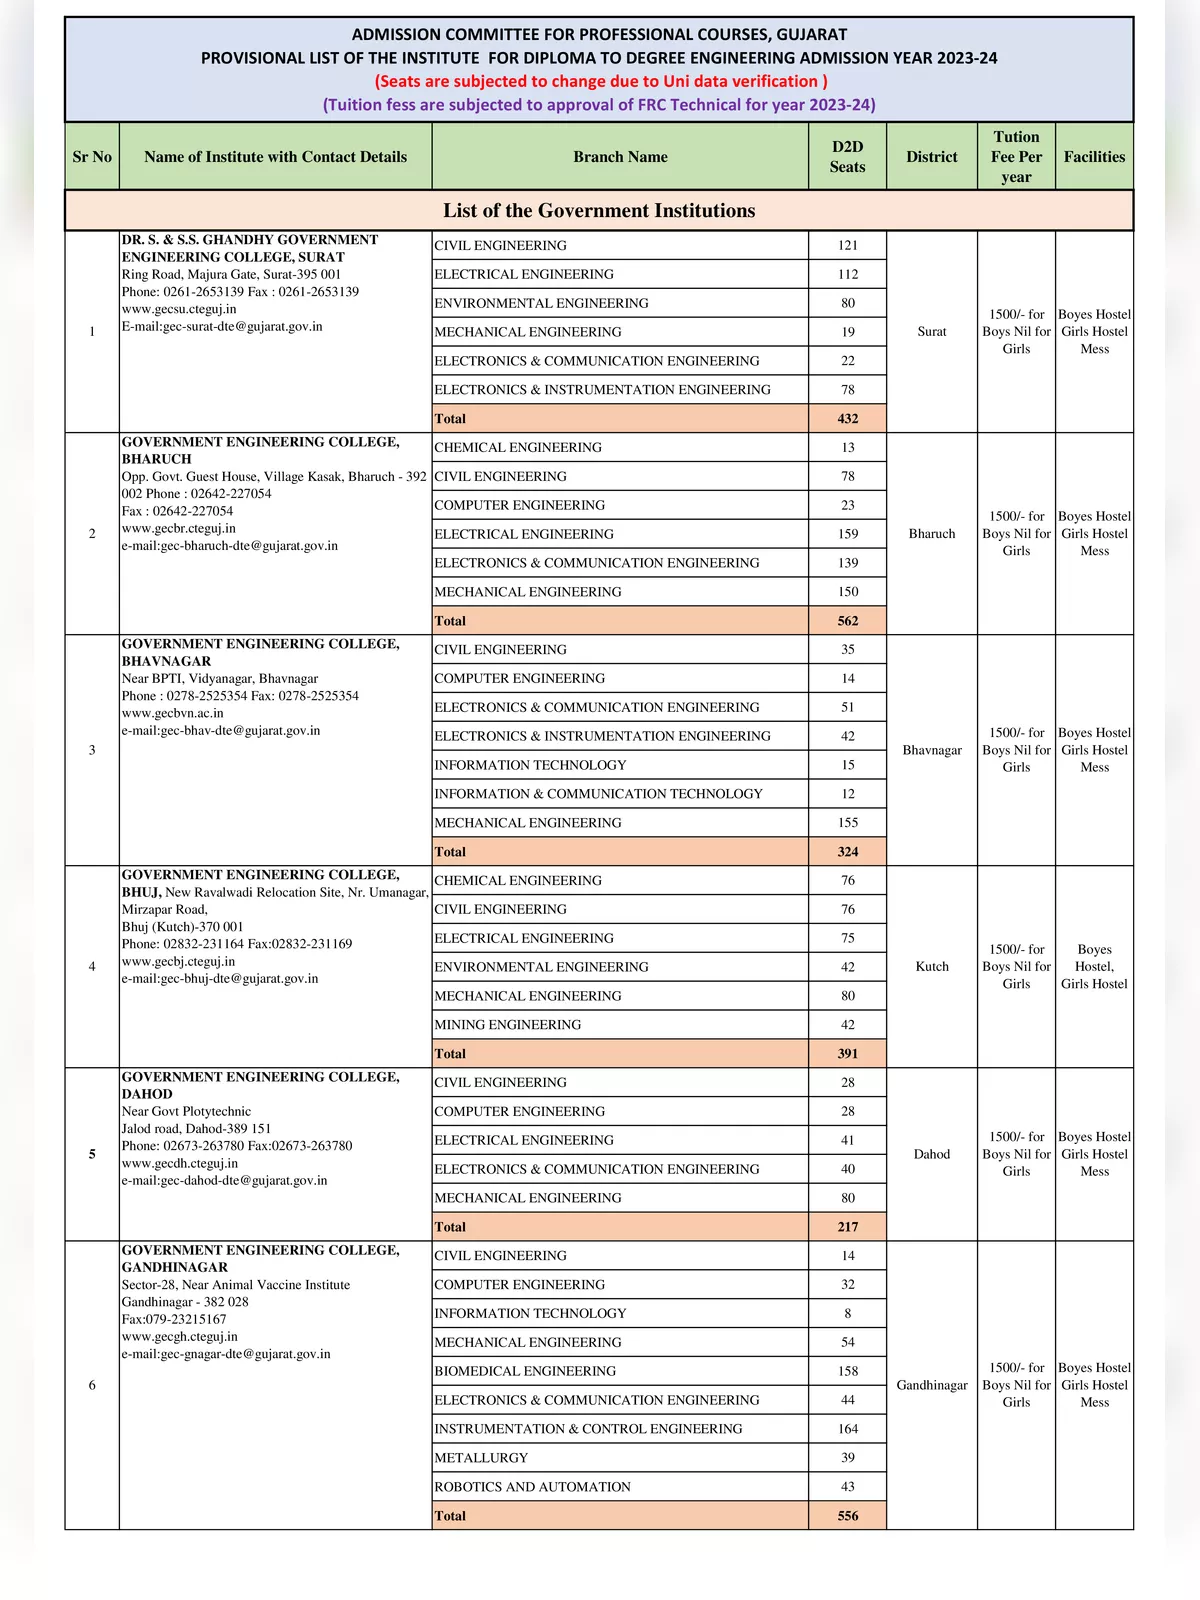 ACPC Merit List 2023